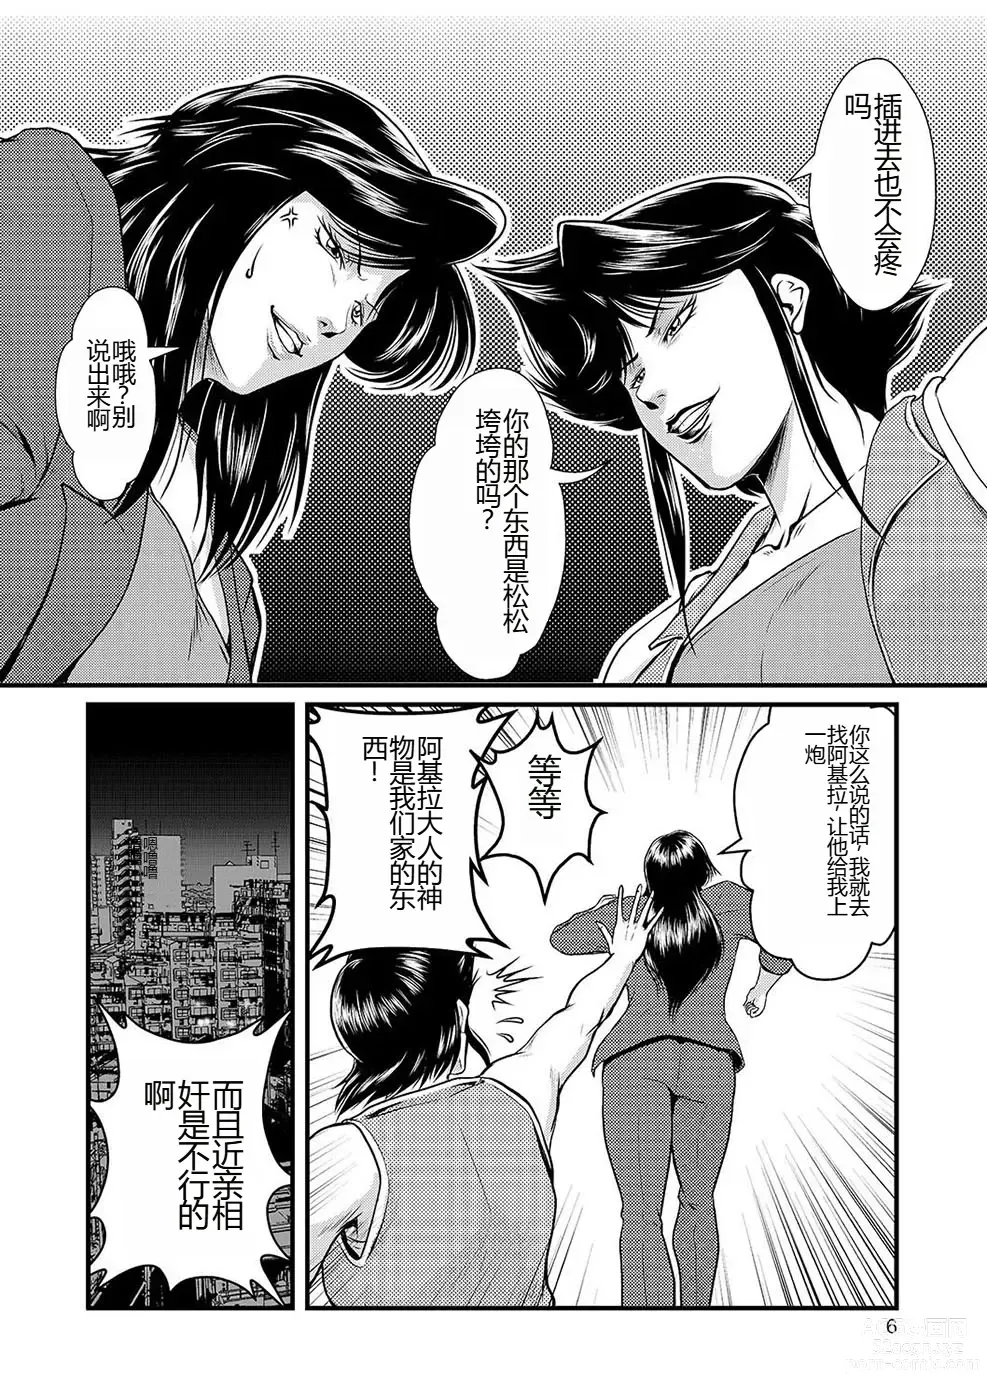 Page 7 of doujinshi Bitch & Slave & Mistress